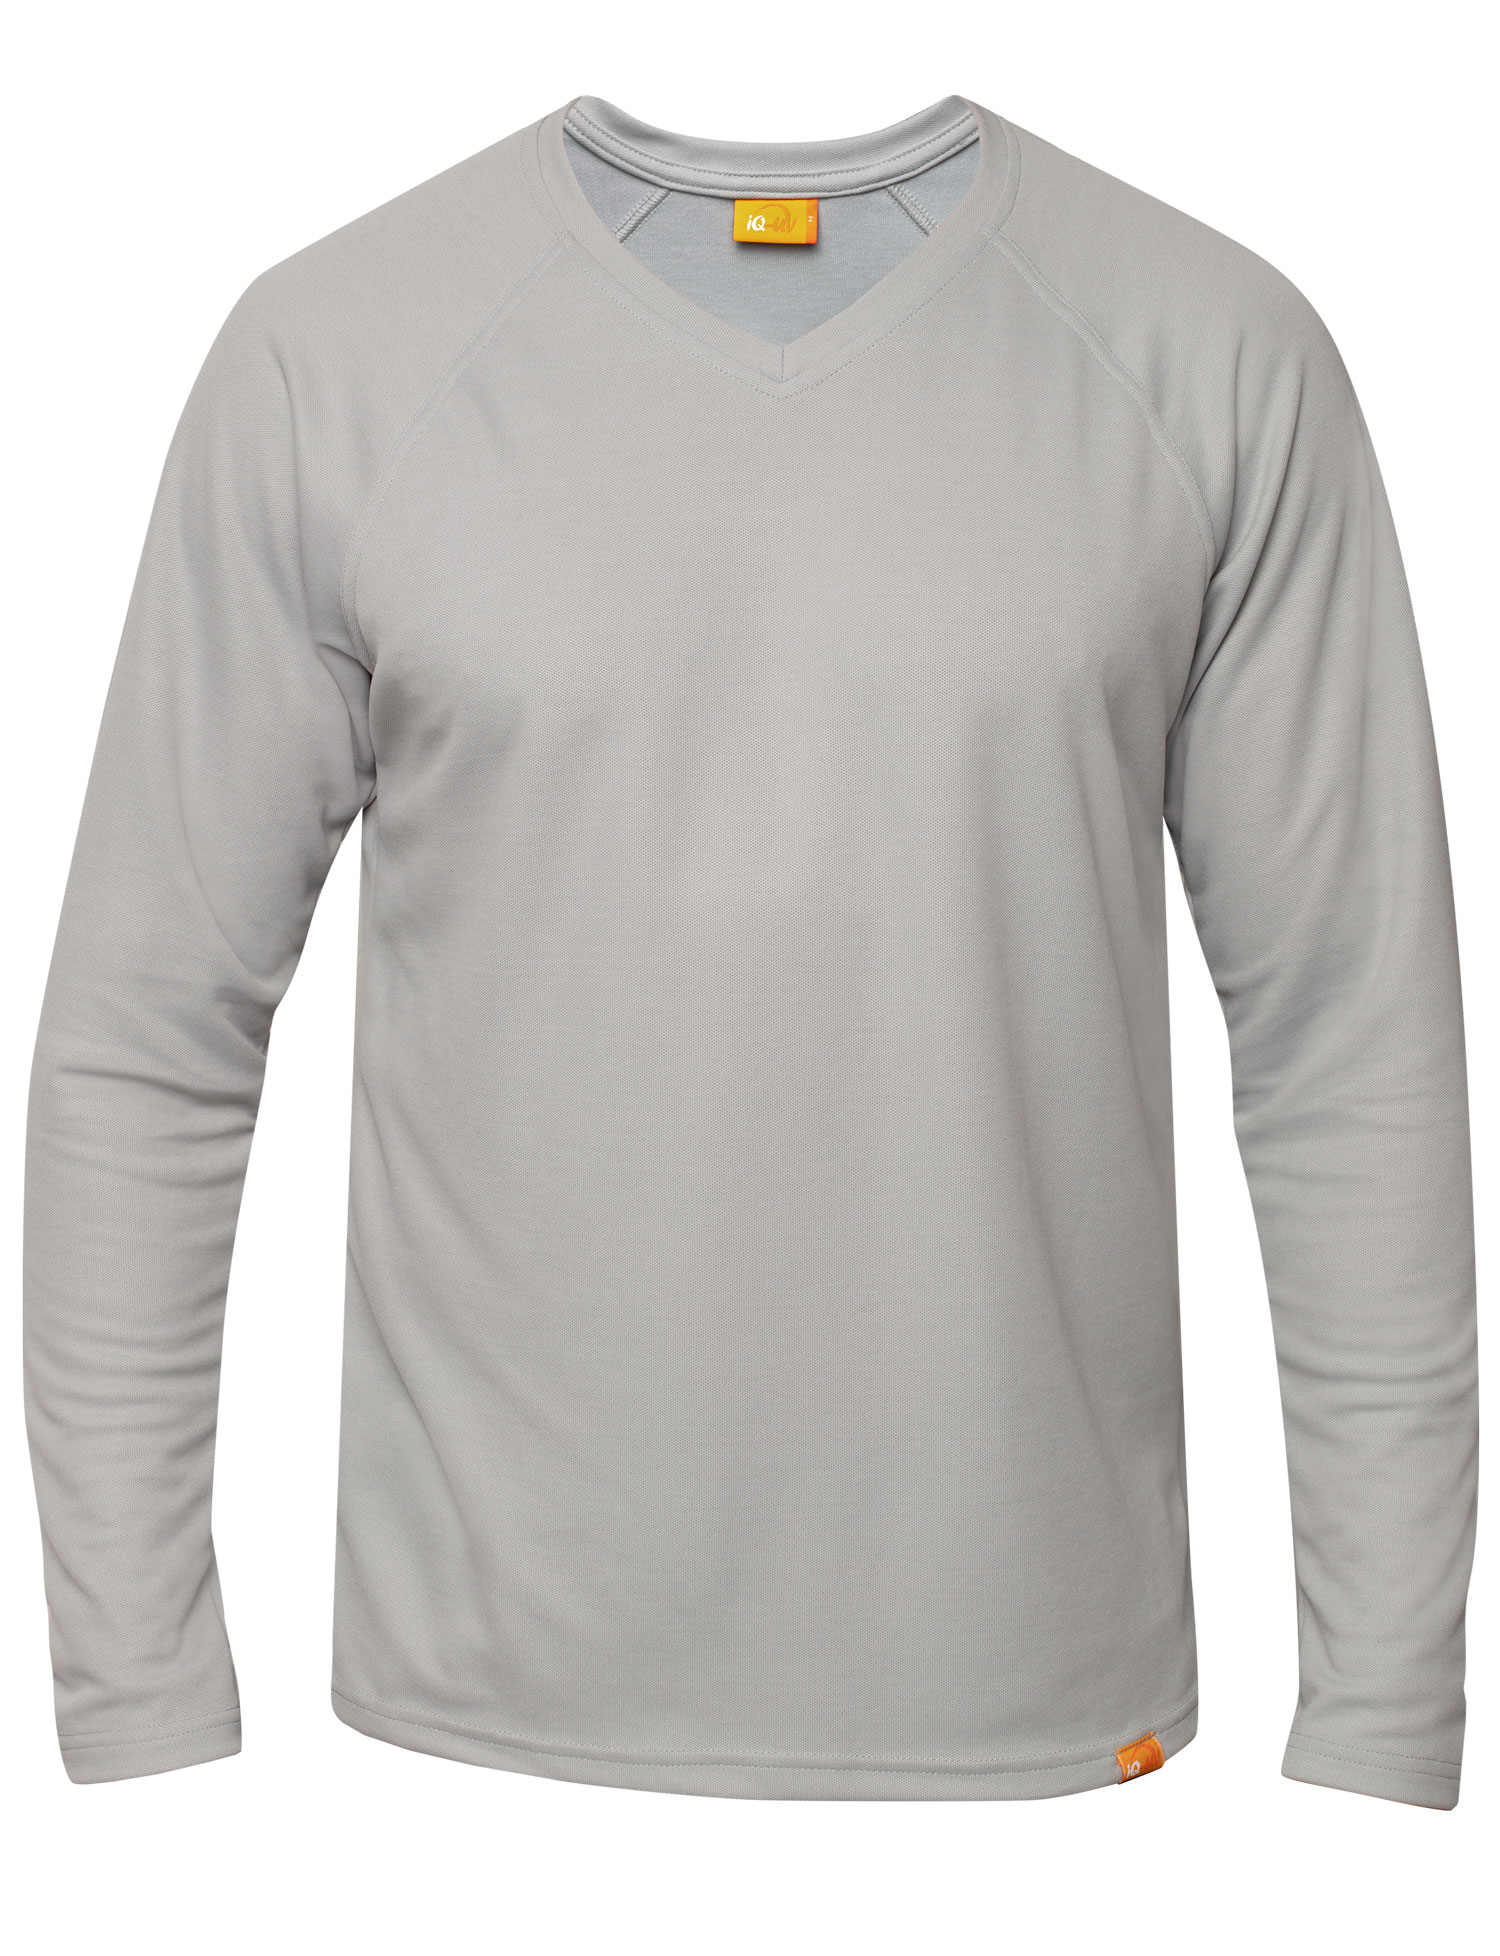 UV langarm Shirt für Herren Outdoor V-Ausschnitt grau